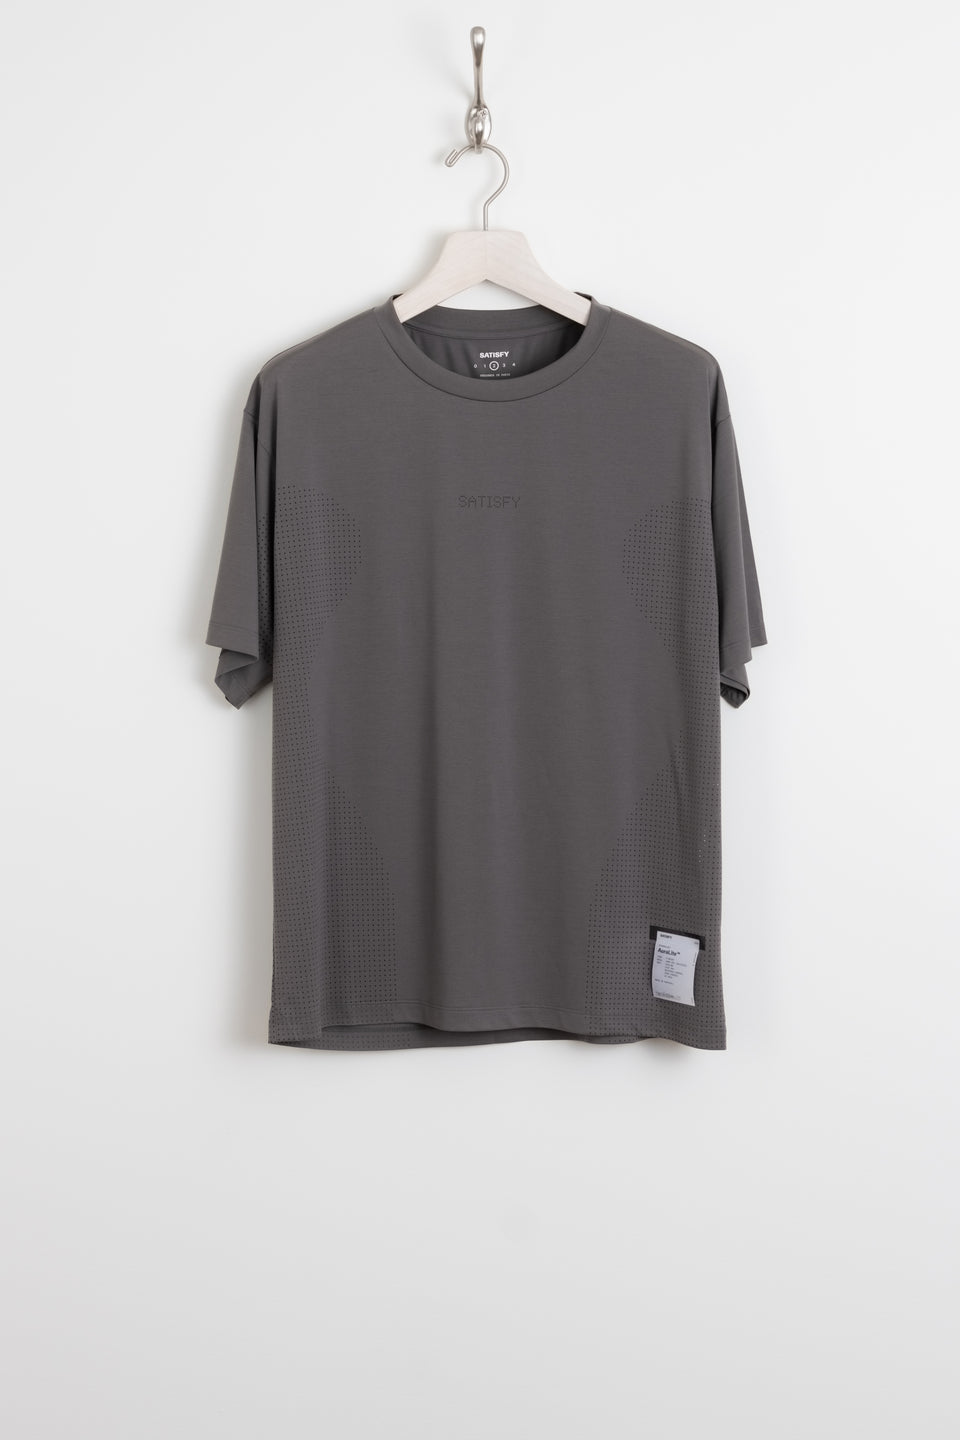 SATISY men's running apparel auralite air t-shirt dolomite grey calculus online shop canada